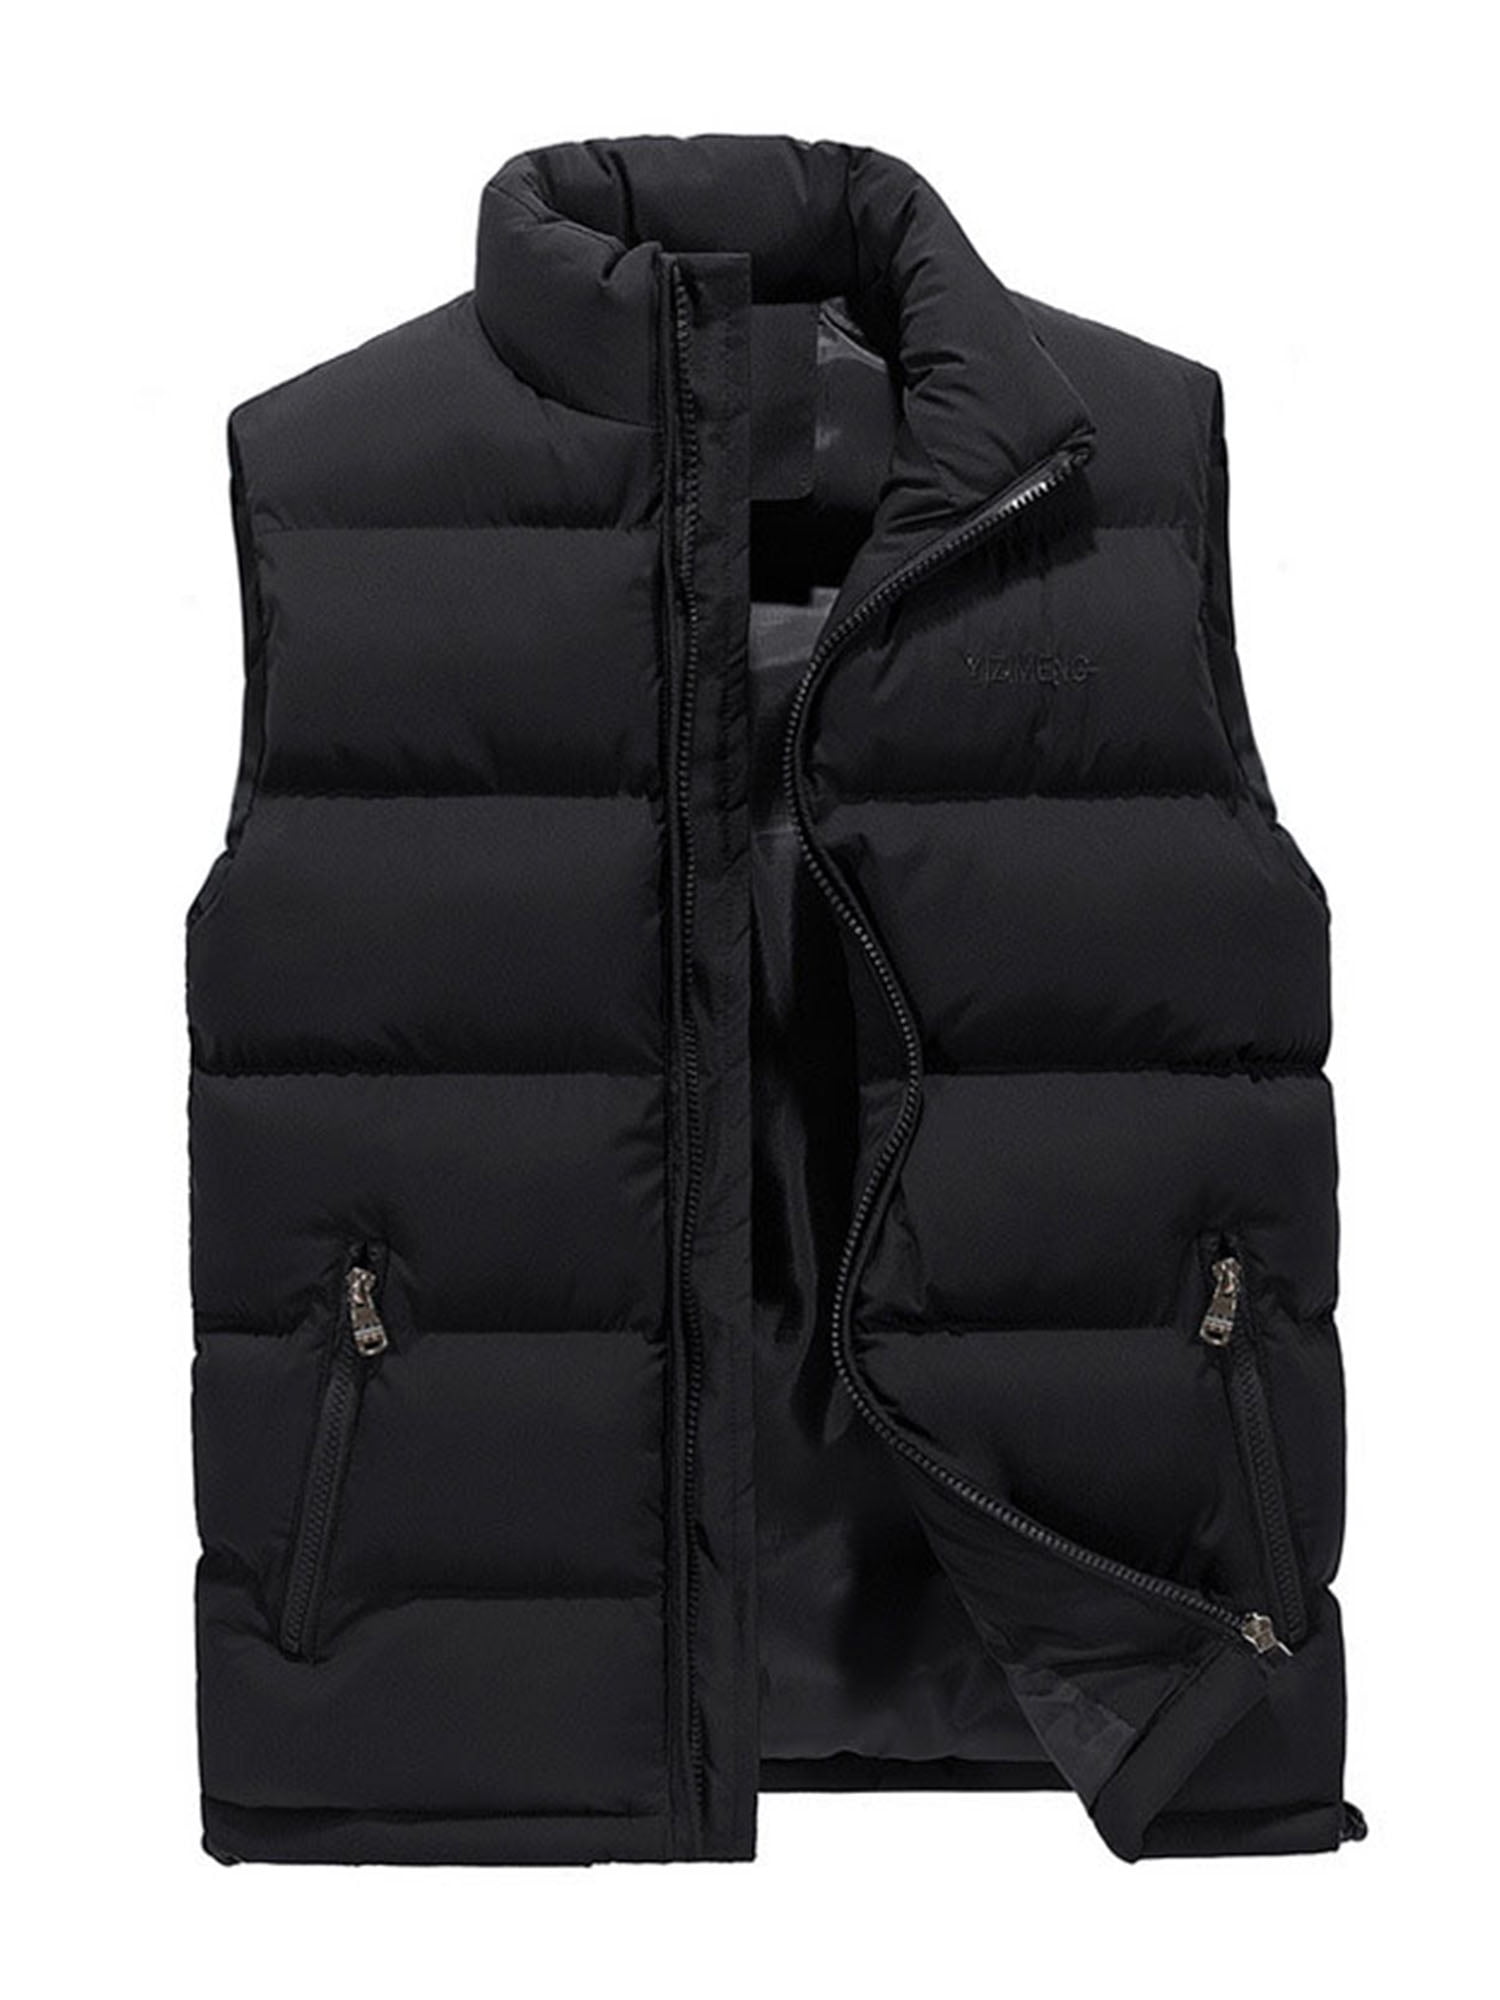 Men's Puffer Vest Winter Warm Coats Full Zip Warm Sleeveless Cotton Padded Waistcoat Jackets Plus Size 